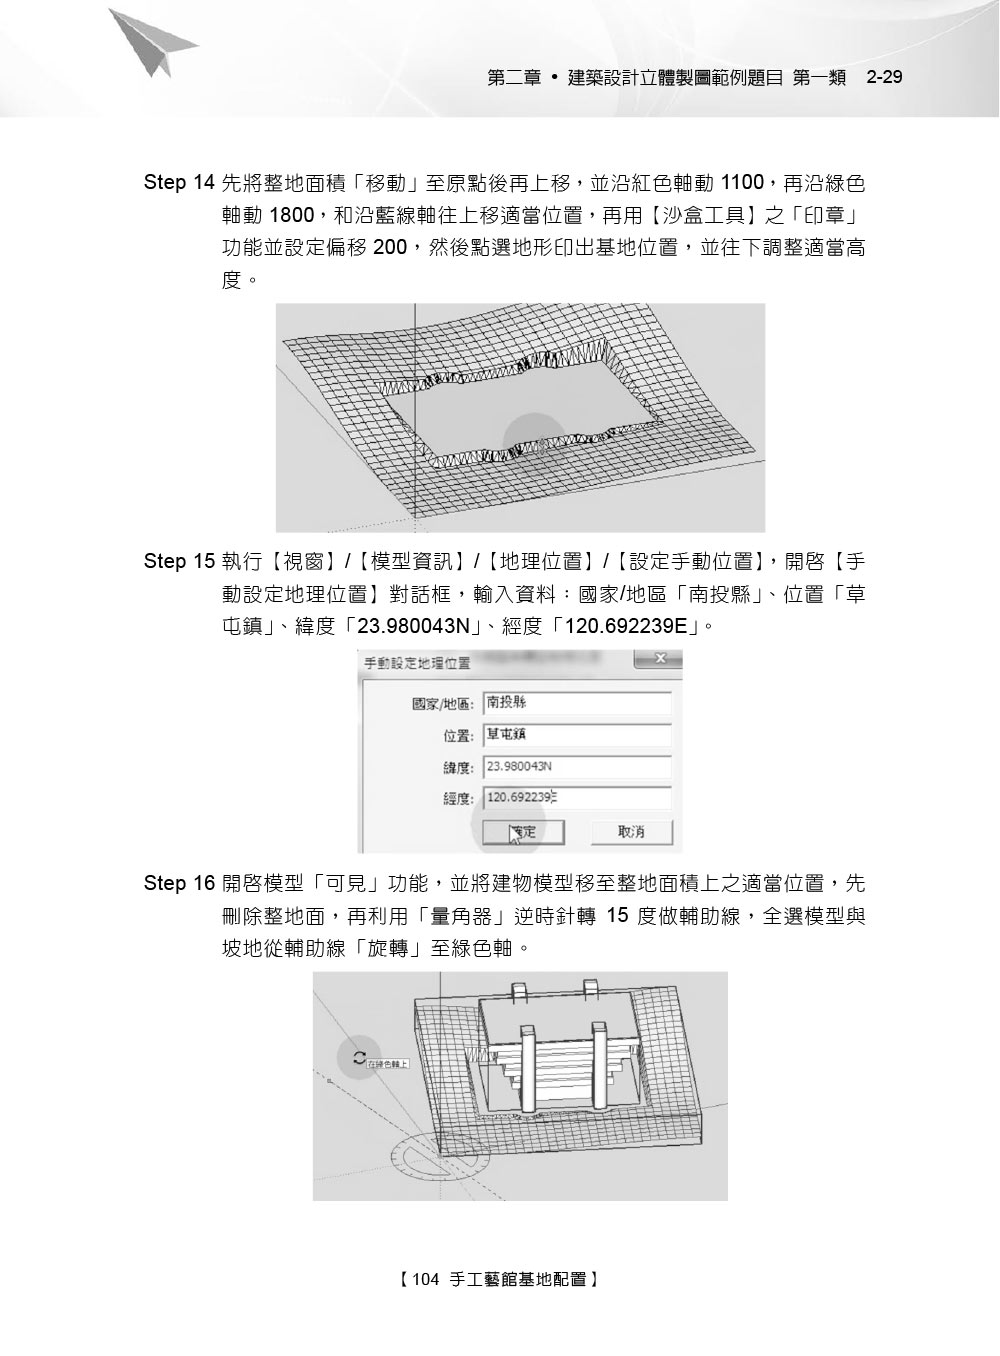 ►GO►最新優惠► [書籍]TQC+ 建築設計與室內設計立體製圖認證指南解題秘笈-SketchUp Pro2015